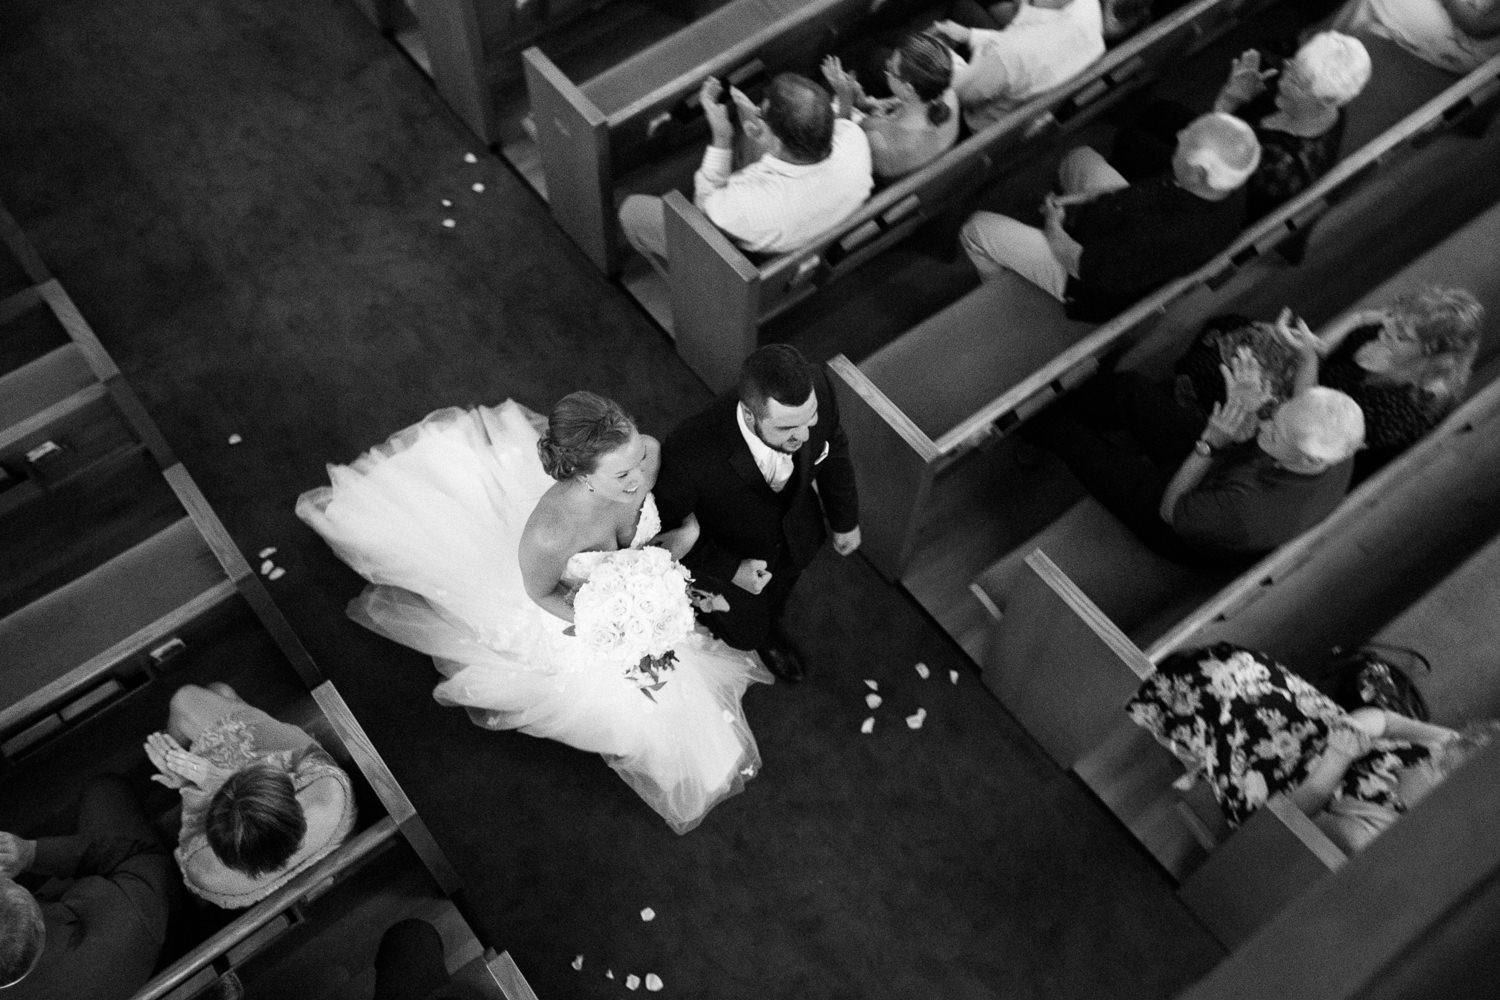 Grant Beachy wedding portrait photographer goshen chicago south bend-024.jpg